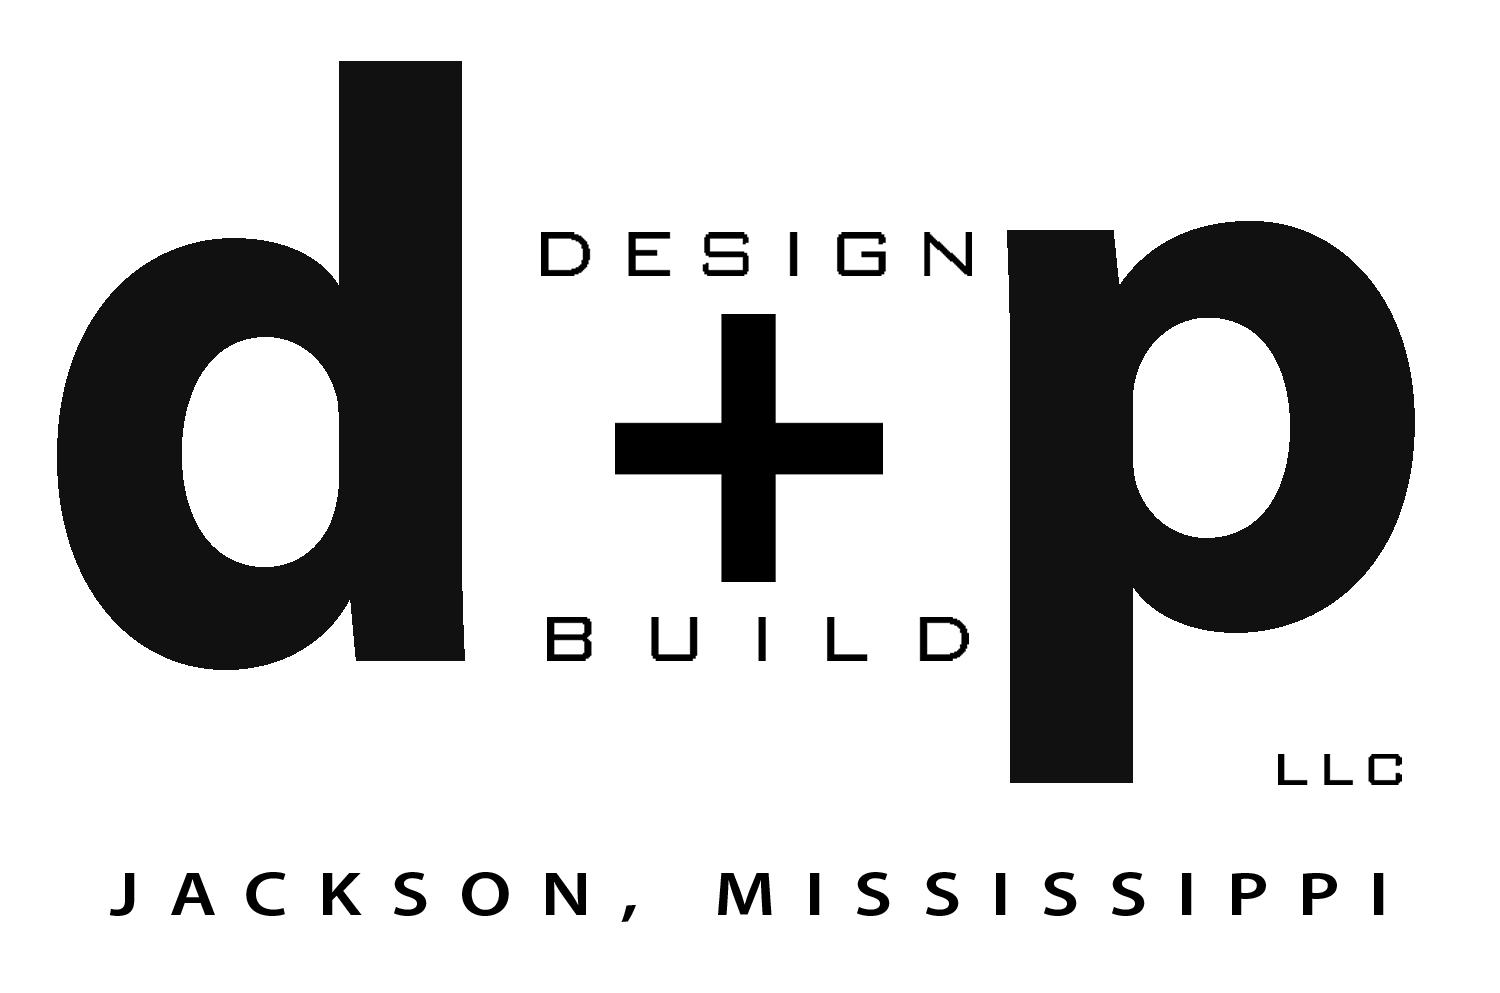 d+p Design Build, LLC